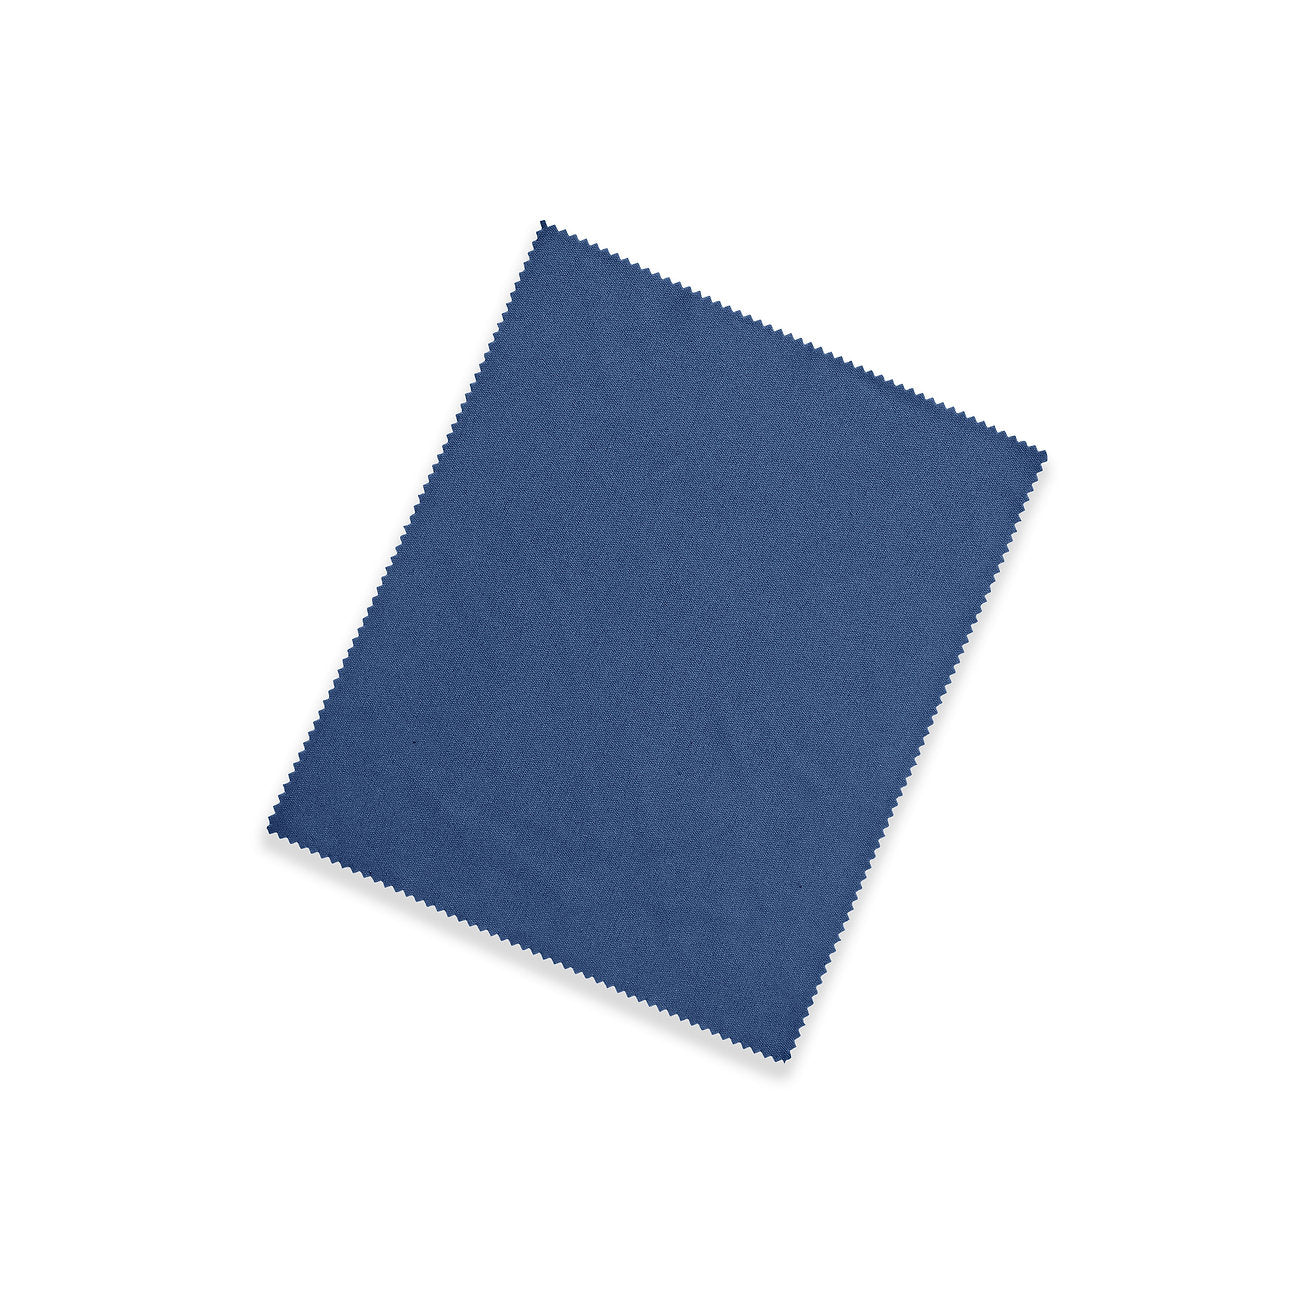 Dark blue microfiber cloth